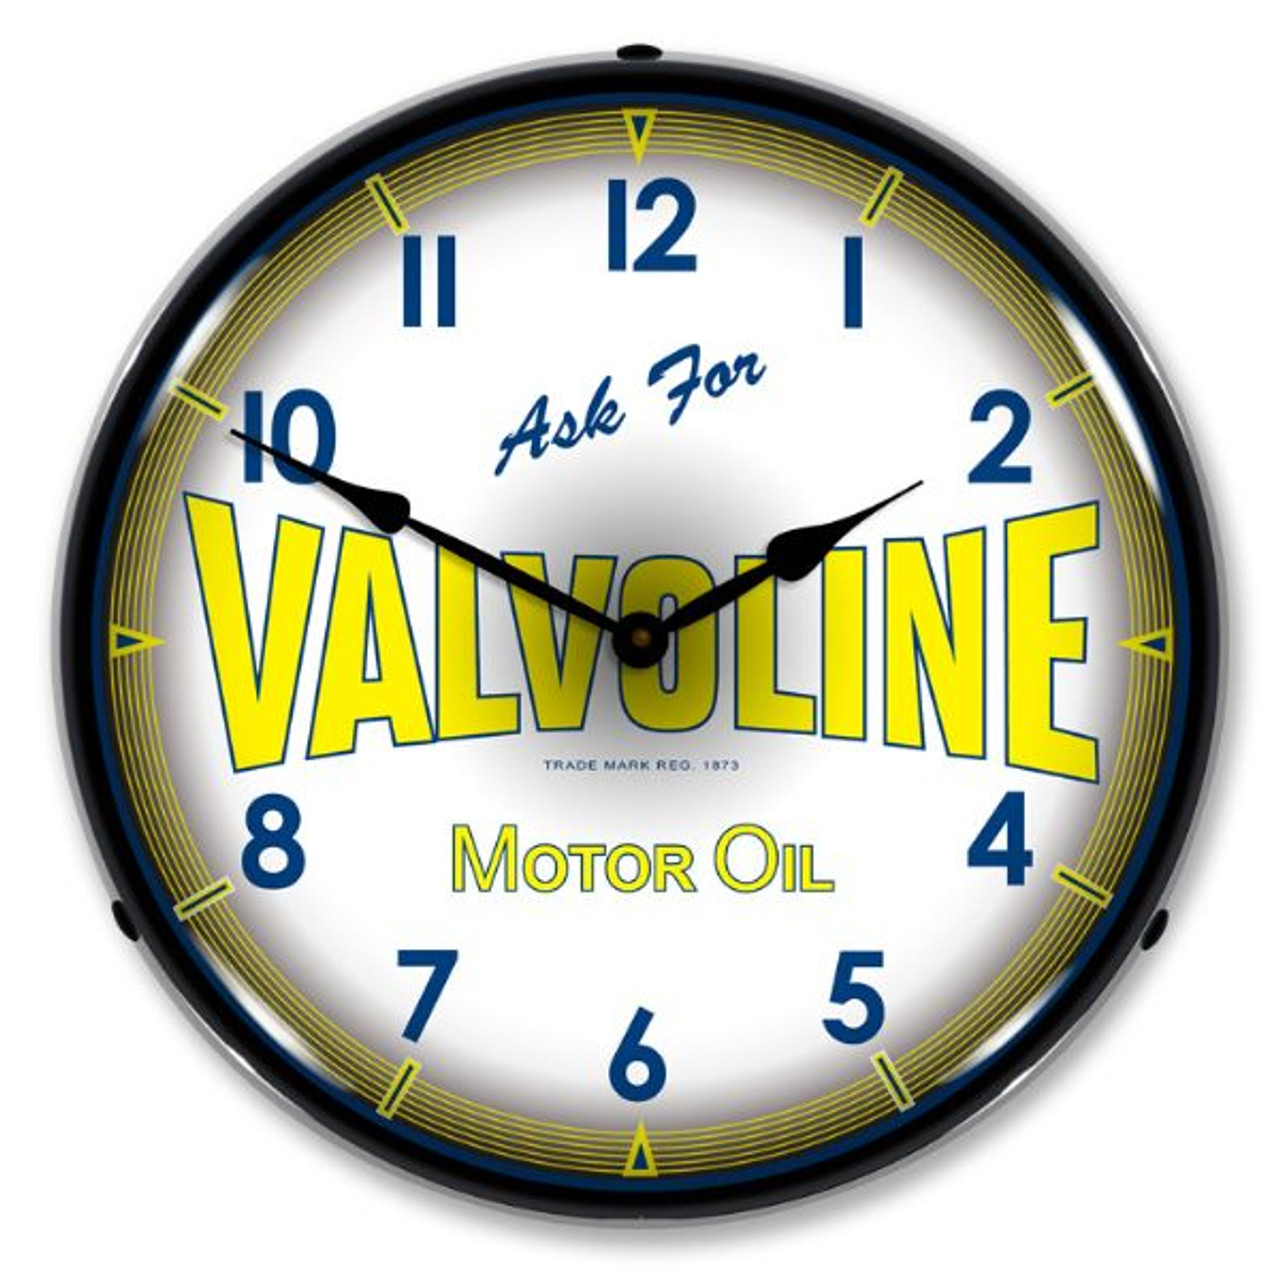 Valvoline Motor Oil Clock